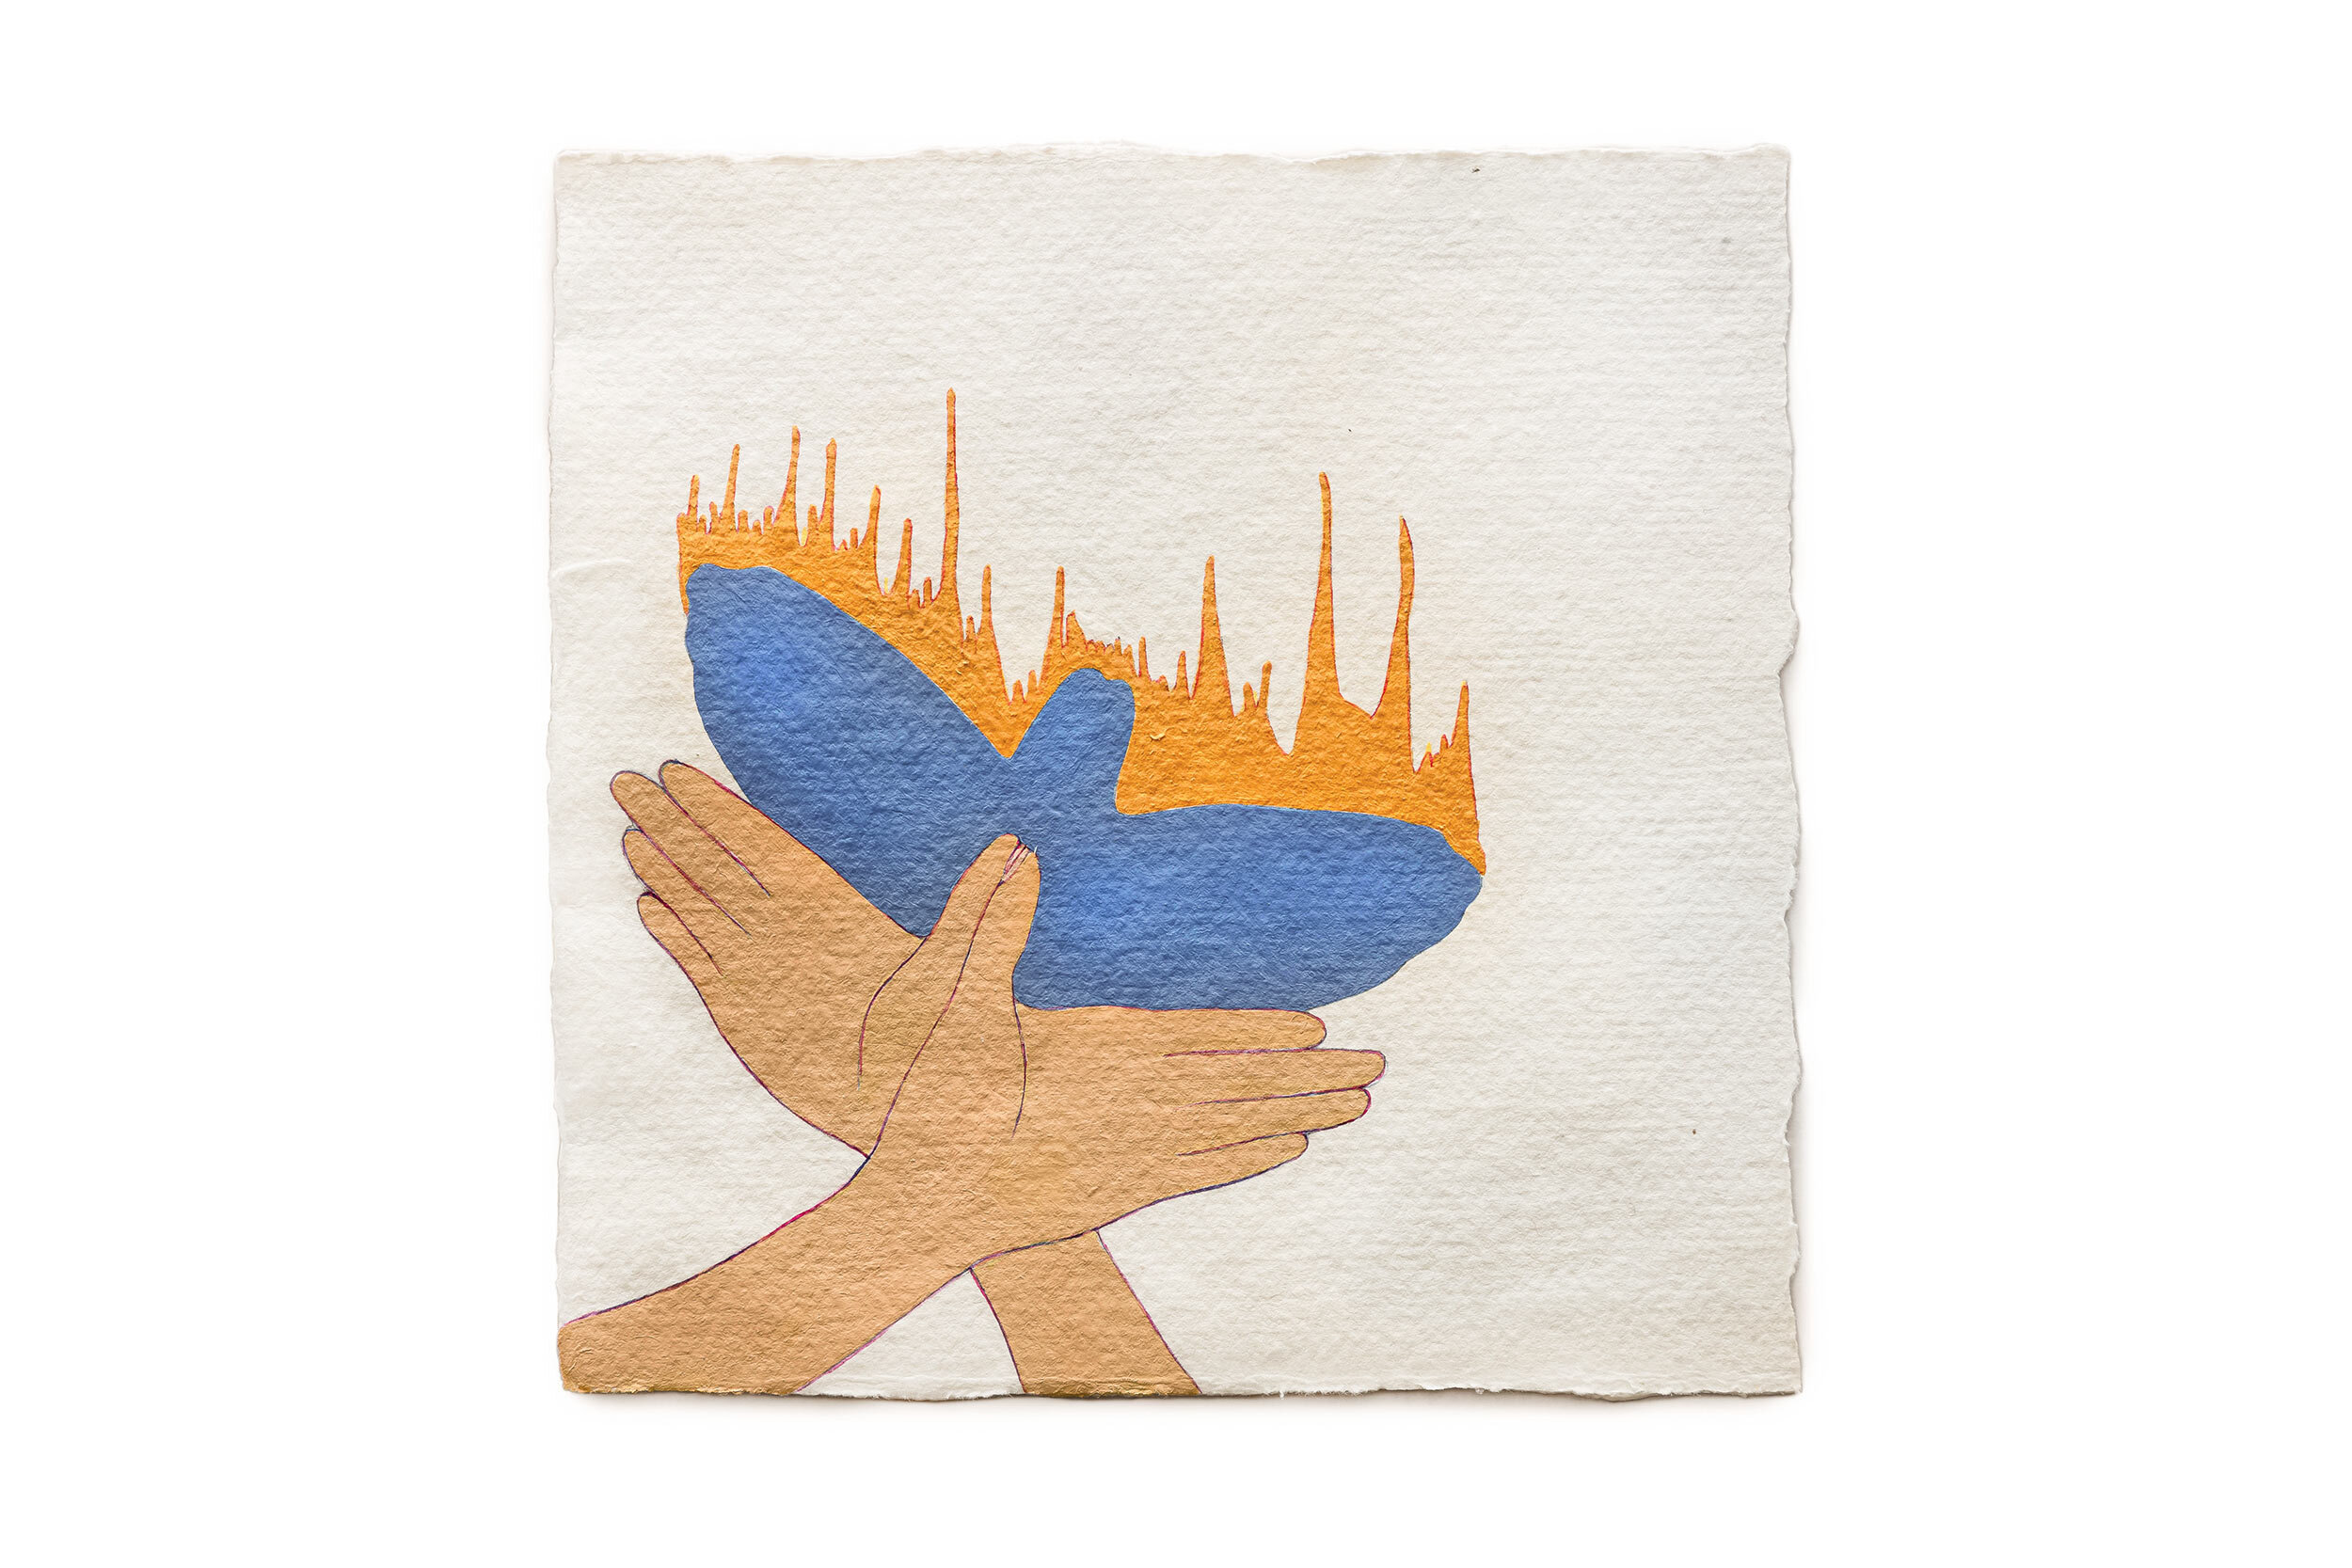   Fire Diary (Hand Shadows) , 2020 Acrylic on paper, 6” x 6” each 